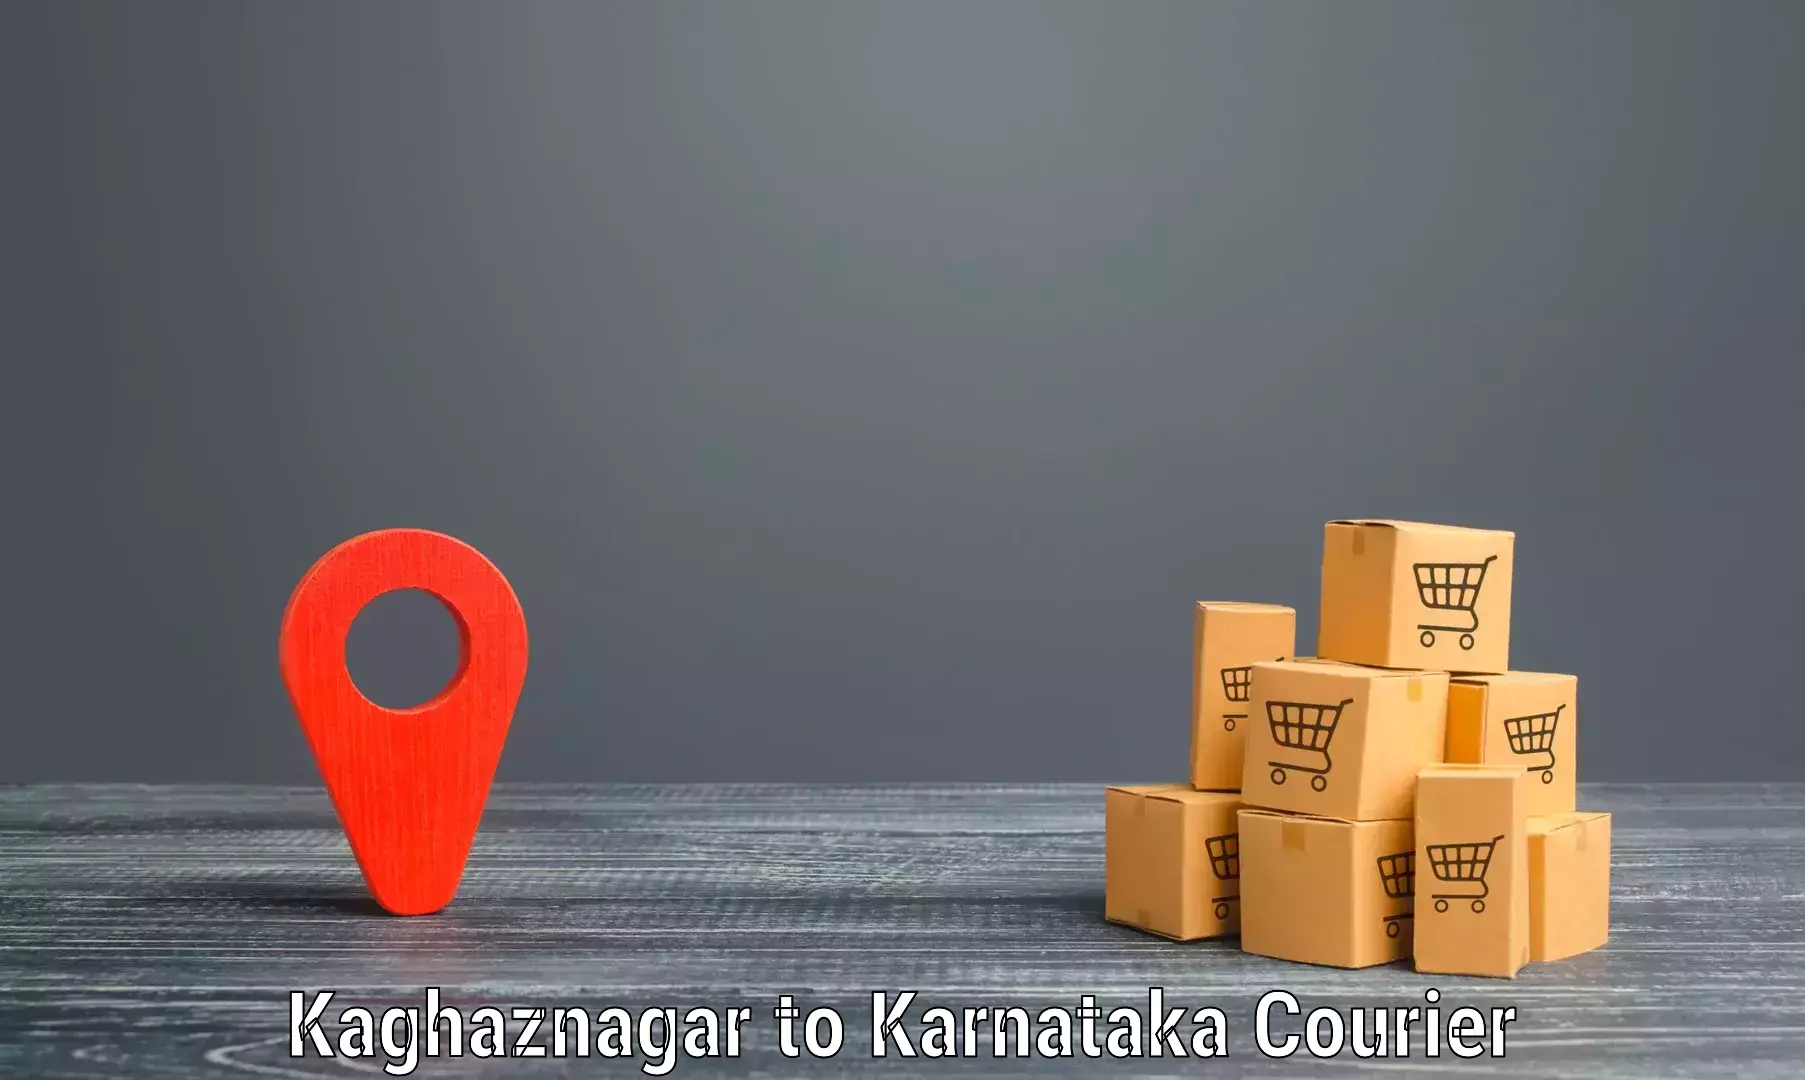 Advanced tracking systems Kaghaznagar to Bengaluru